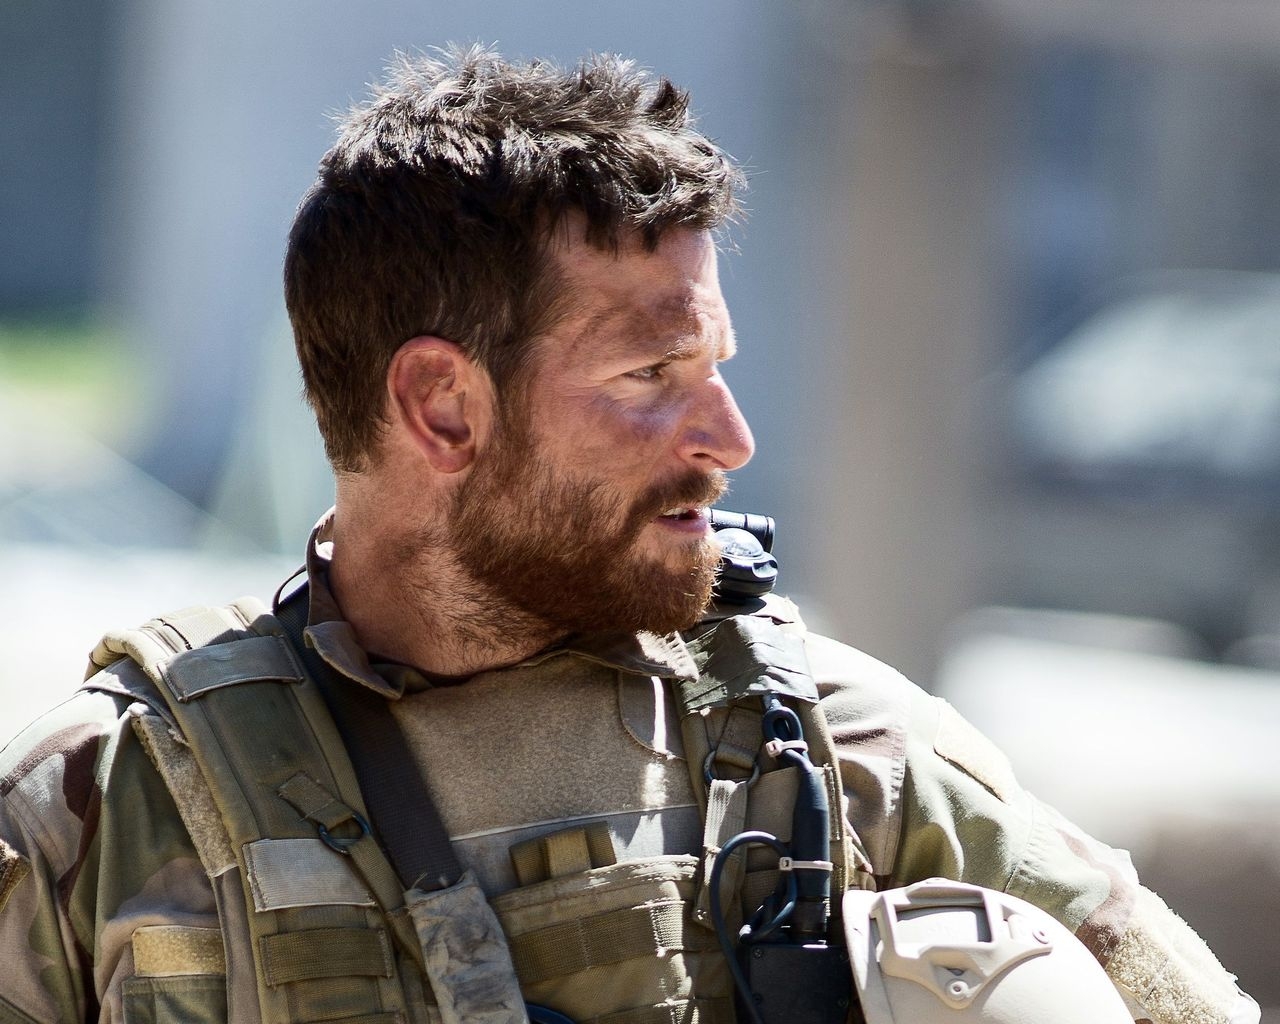 Bradley Cooper in American Sniper for 1280 x 1024 resolution